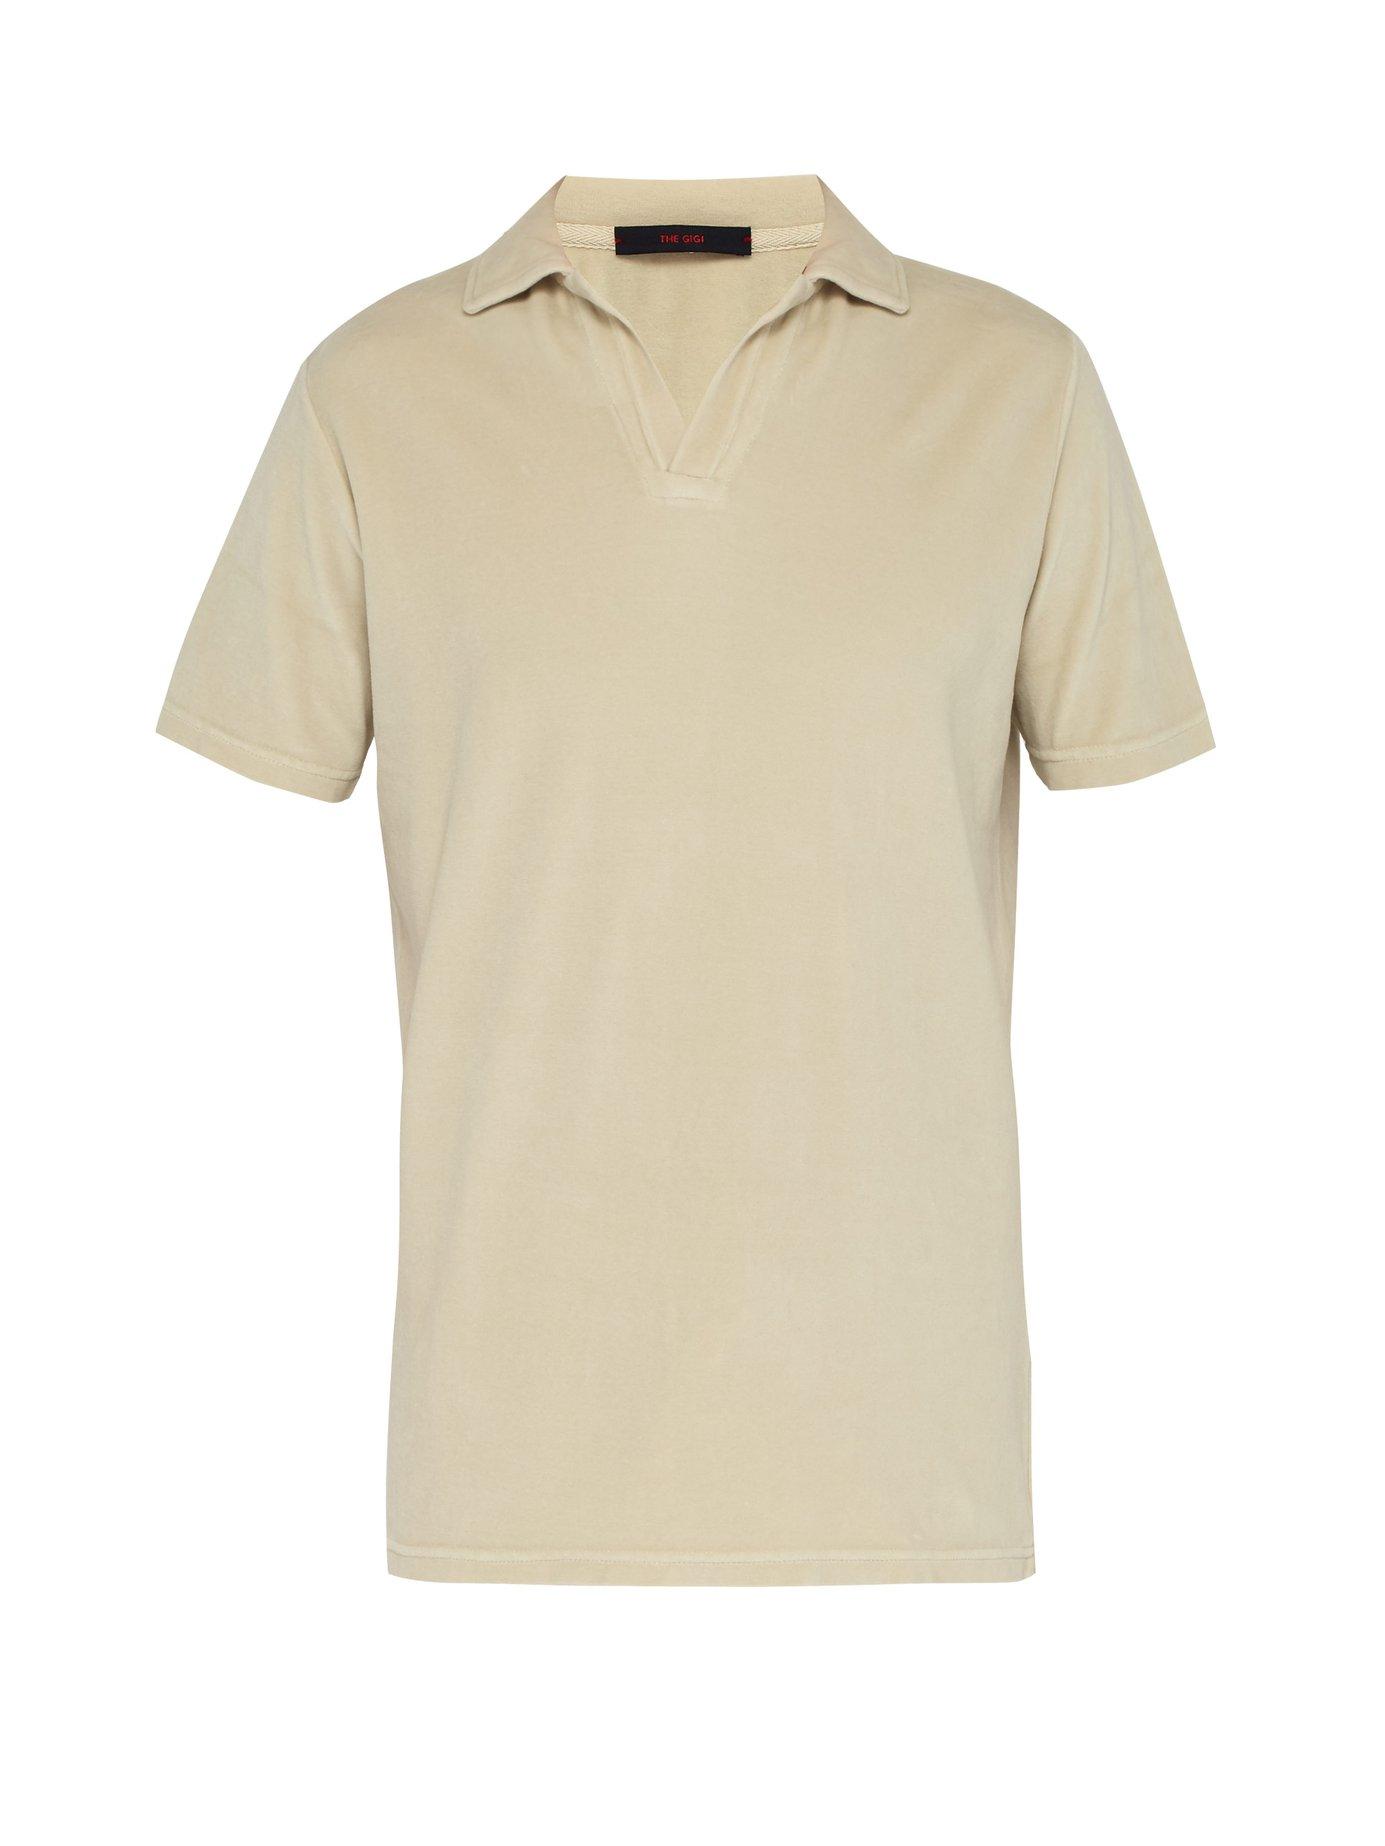 The Gigi Thaiti Cotton Velour Polo Shirt in Natural for Men - Lyst